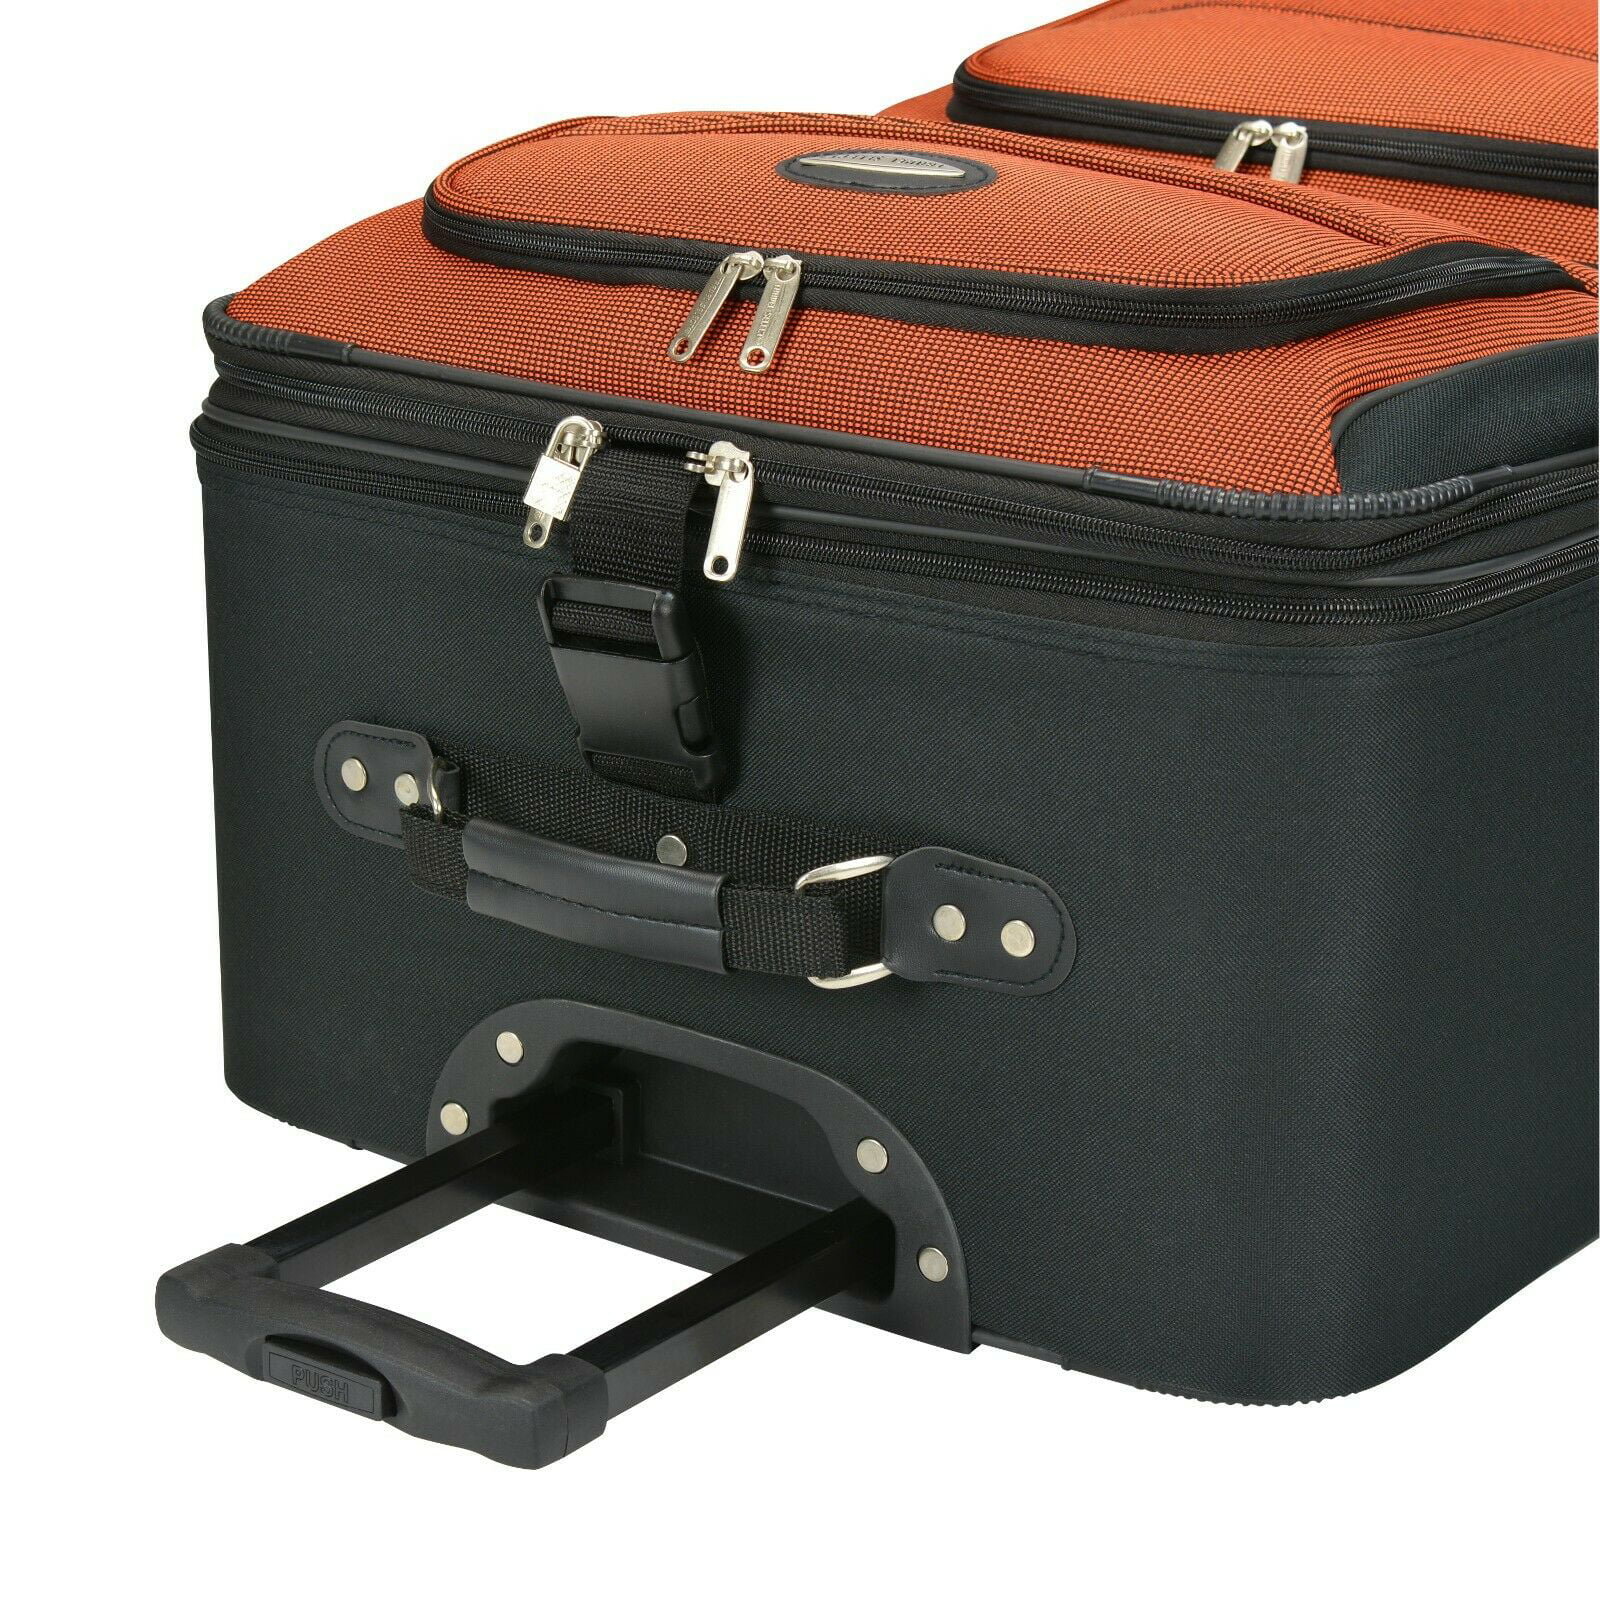 Travel Select Amsterdam Upright Expandable Luggage 